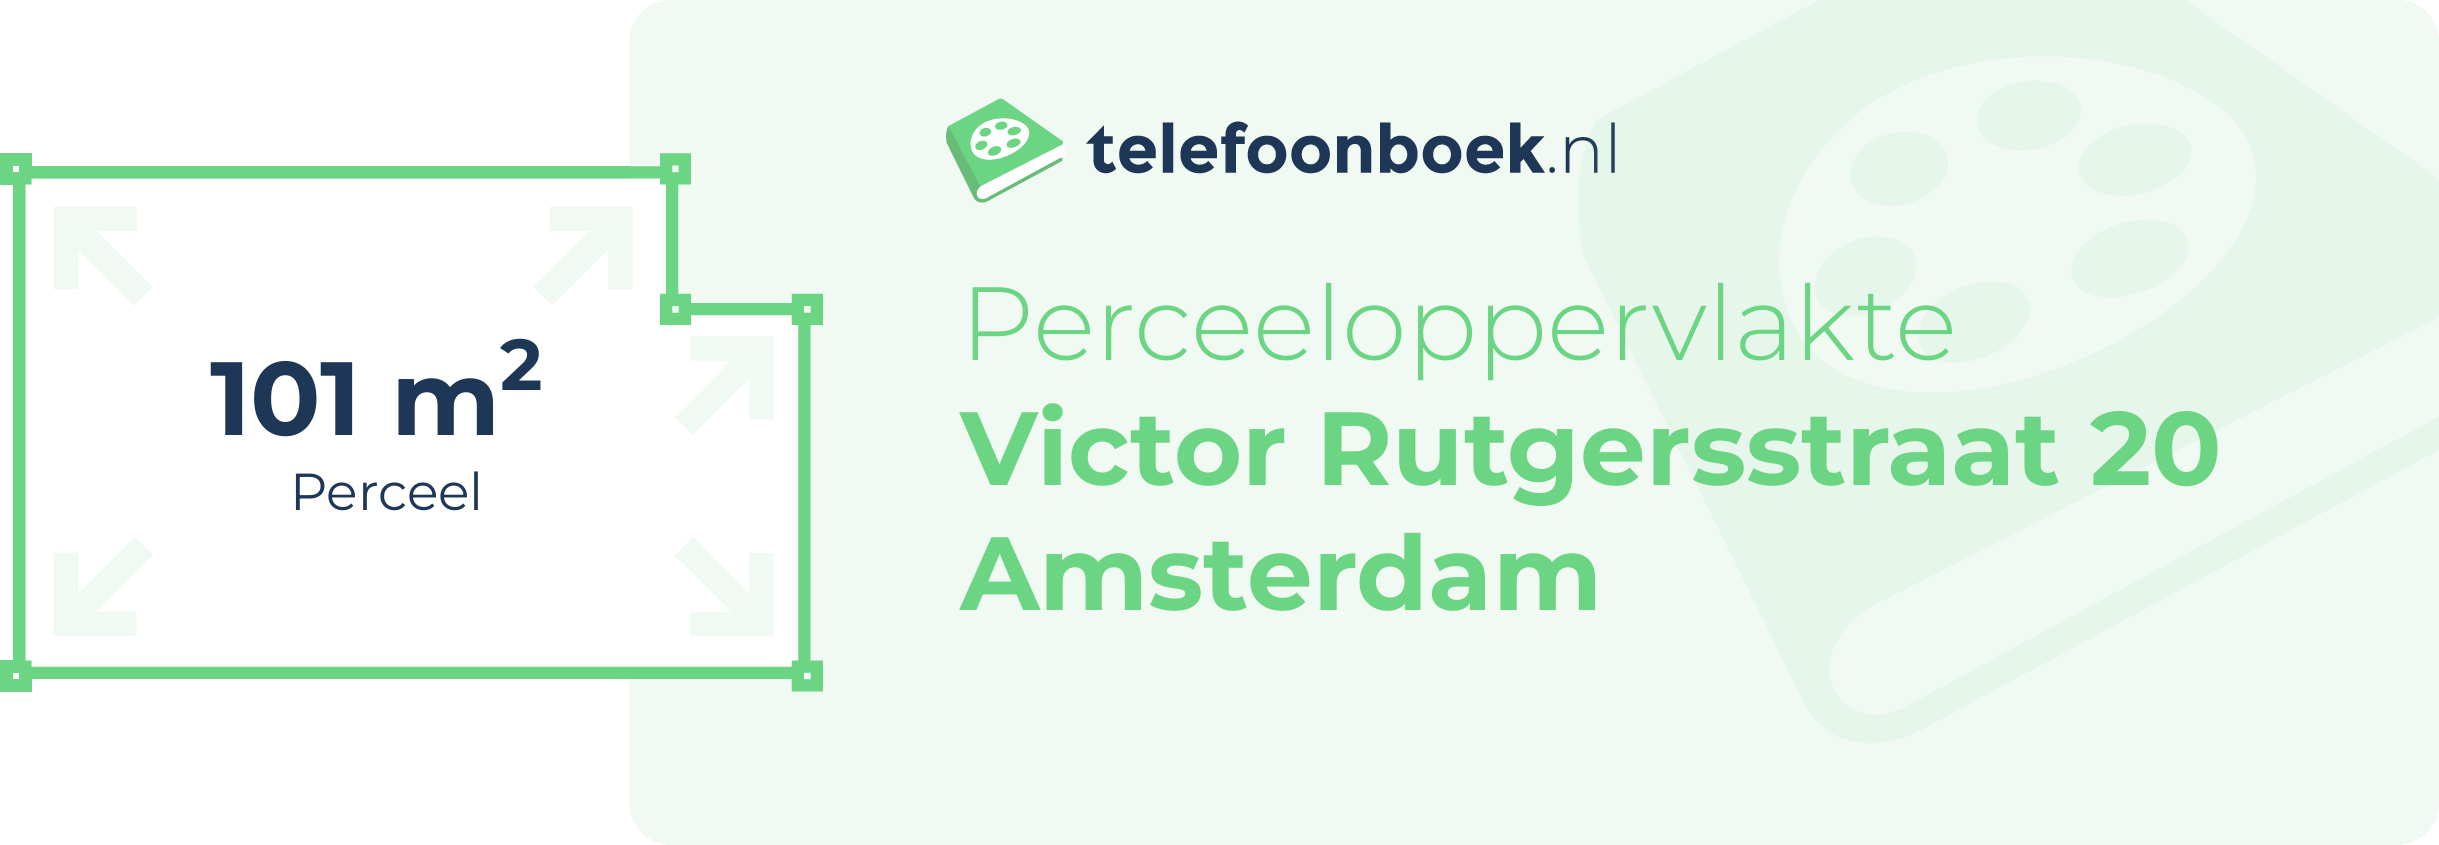 Perceeloppervlakte Victor Rutgersstraat 20 Amsterdam